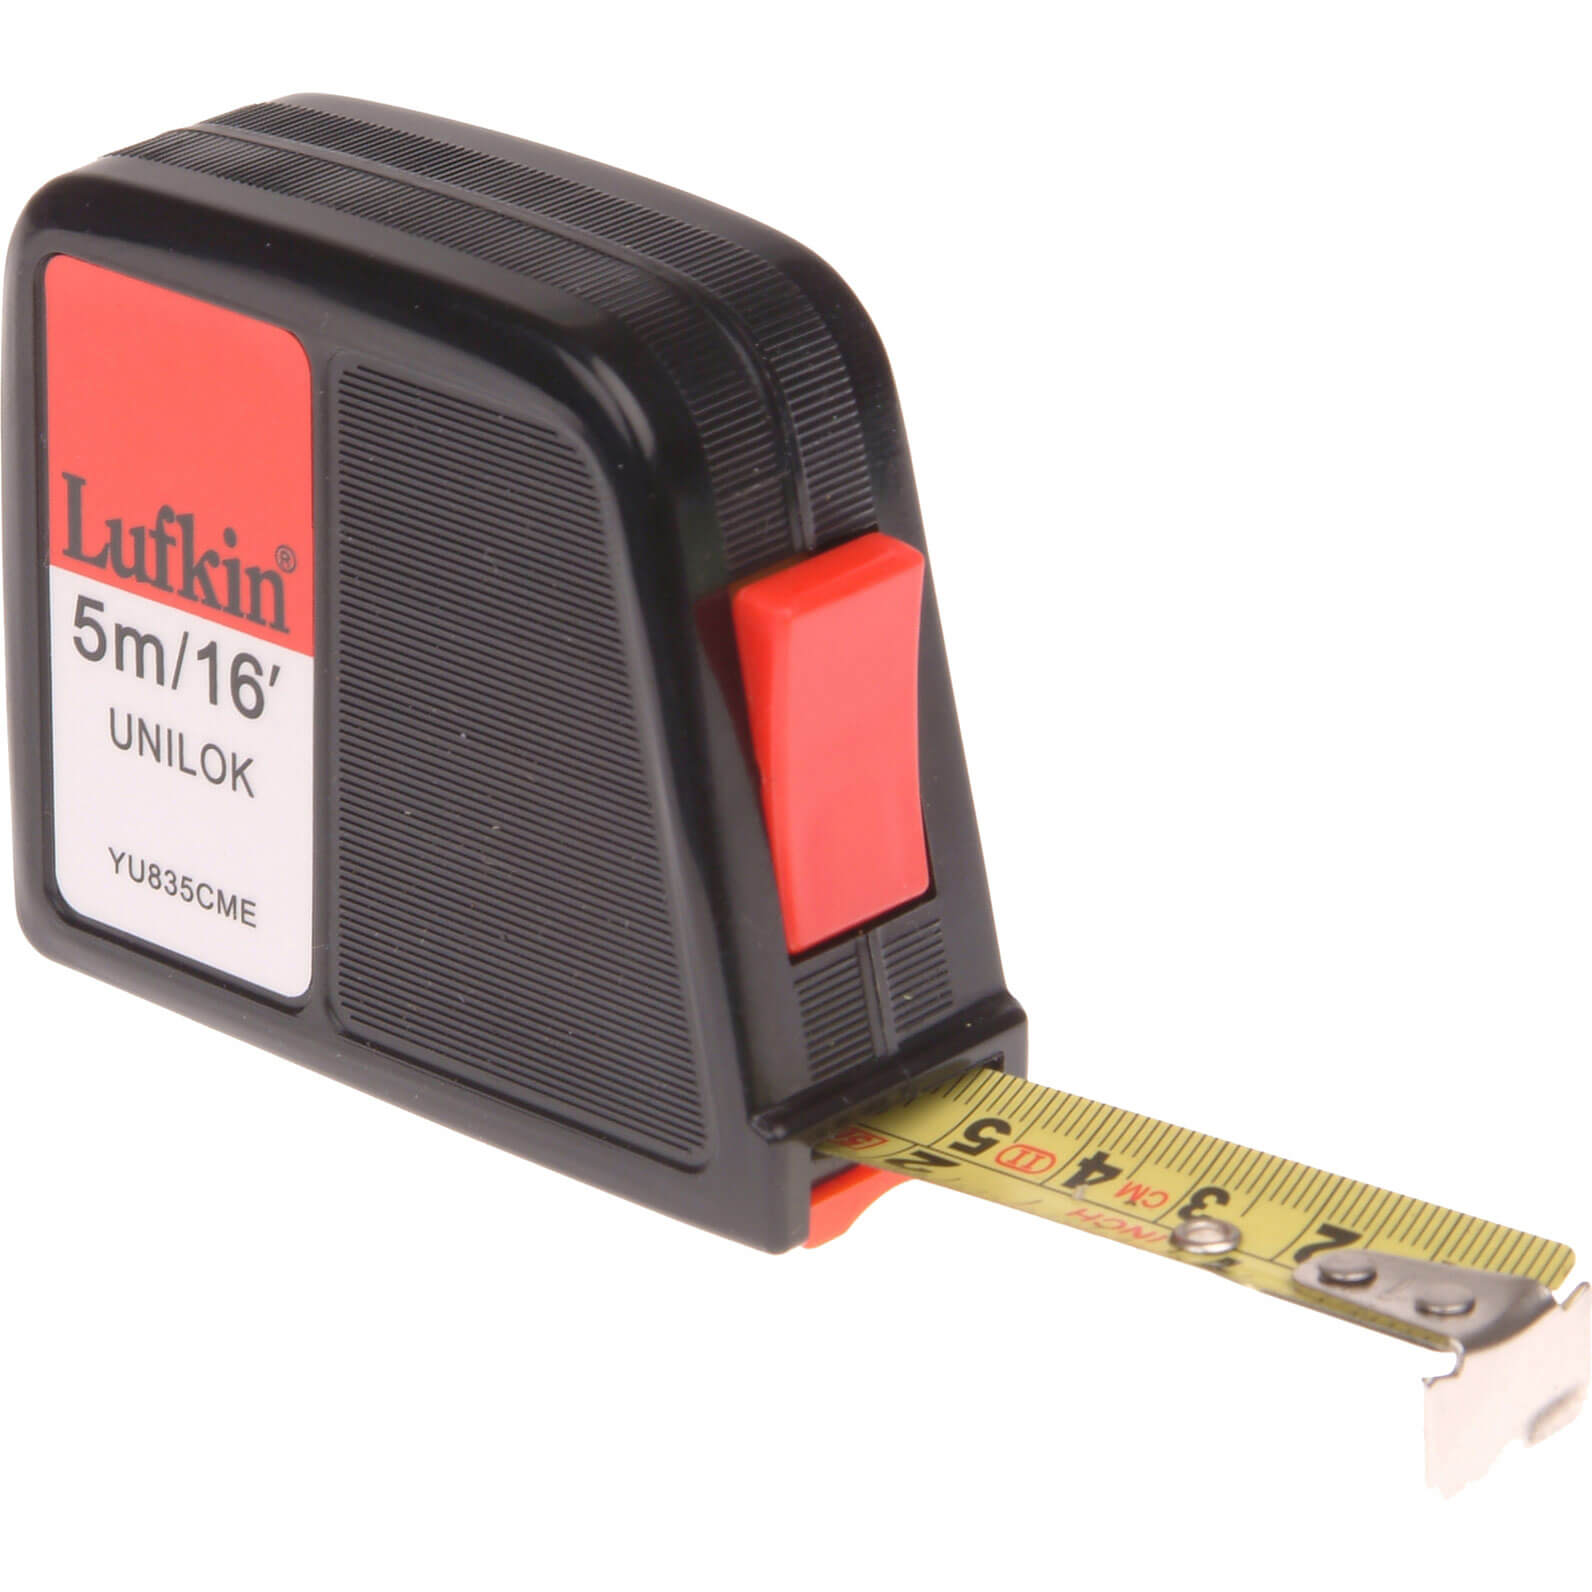 Image of Lufkin Unilok Tape Measure Imperial & Metric 16ft / 5m 19mm